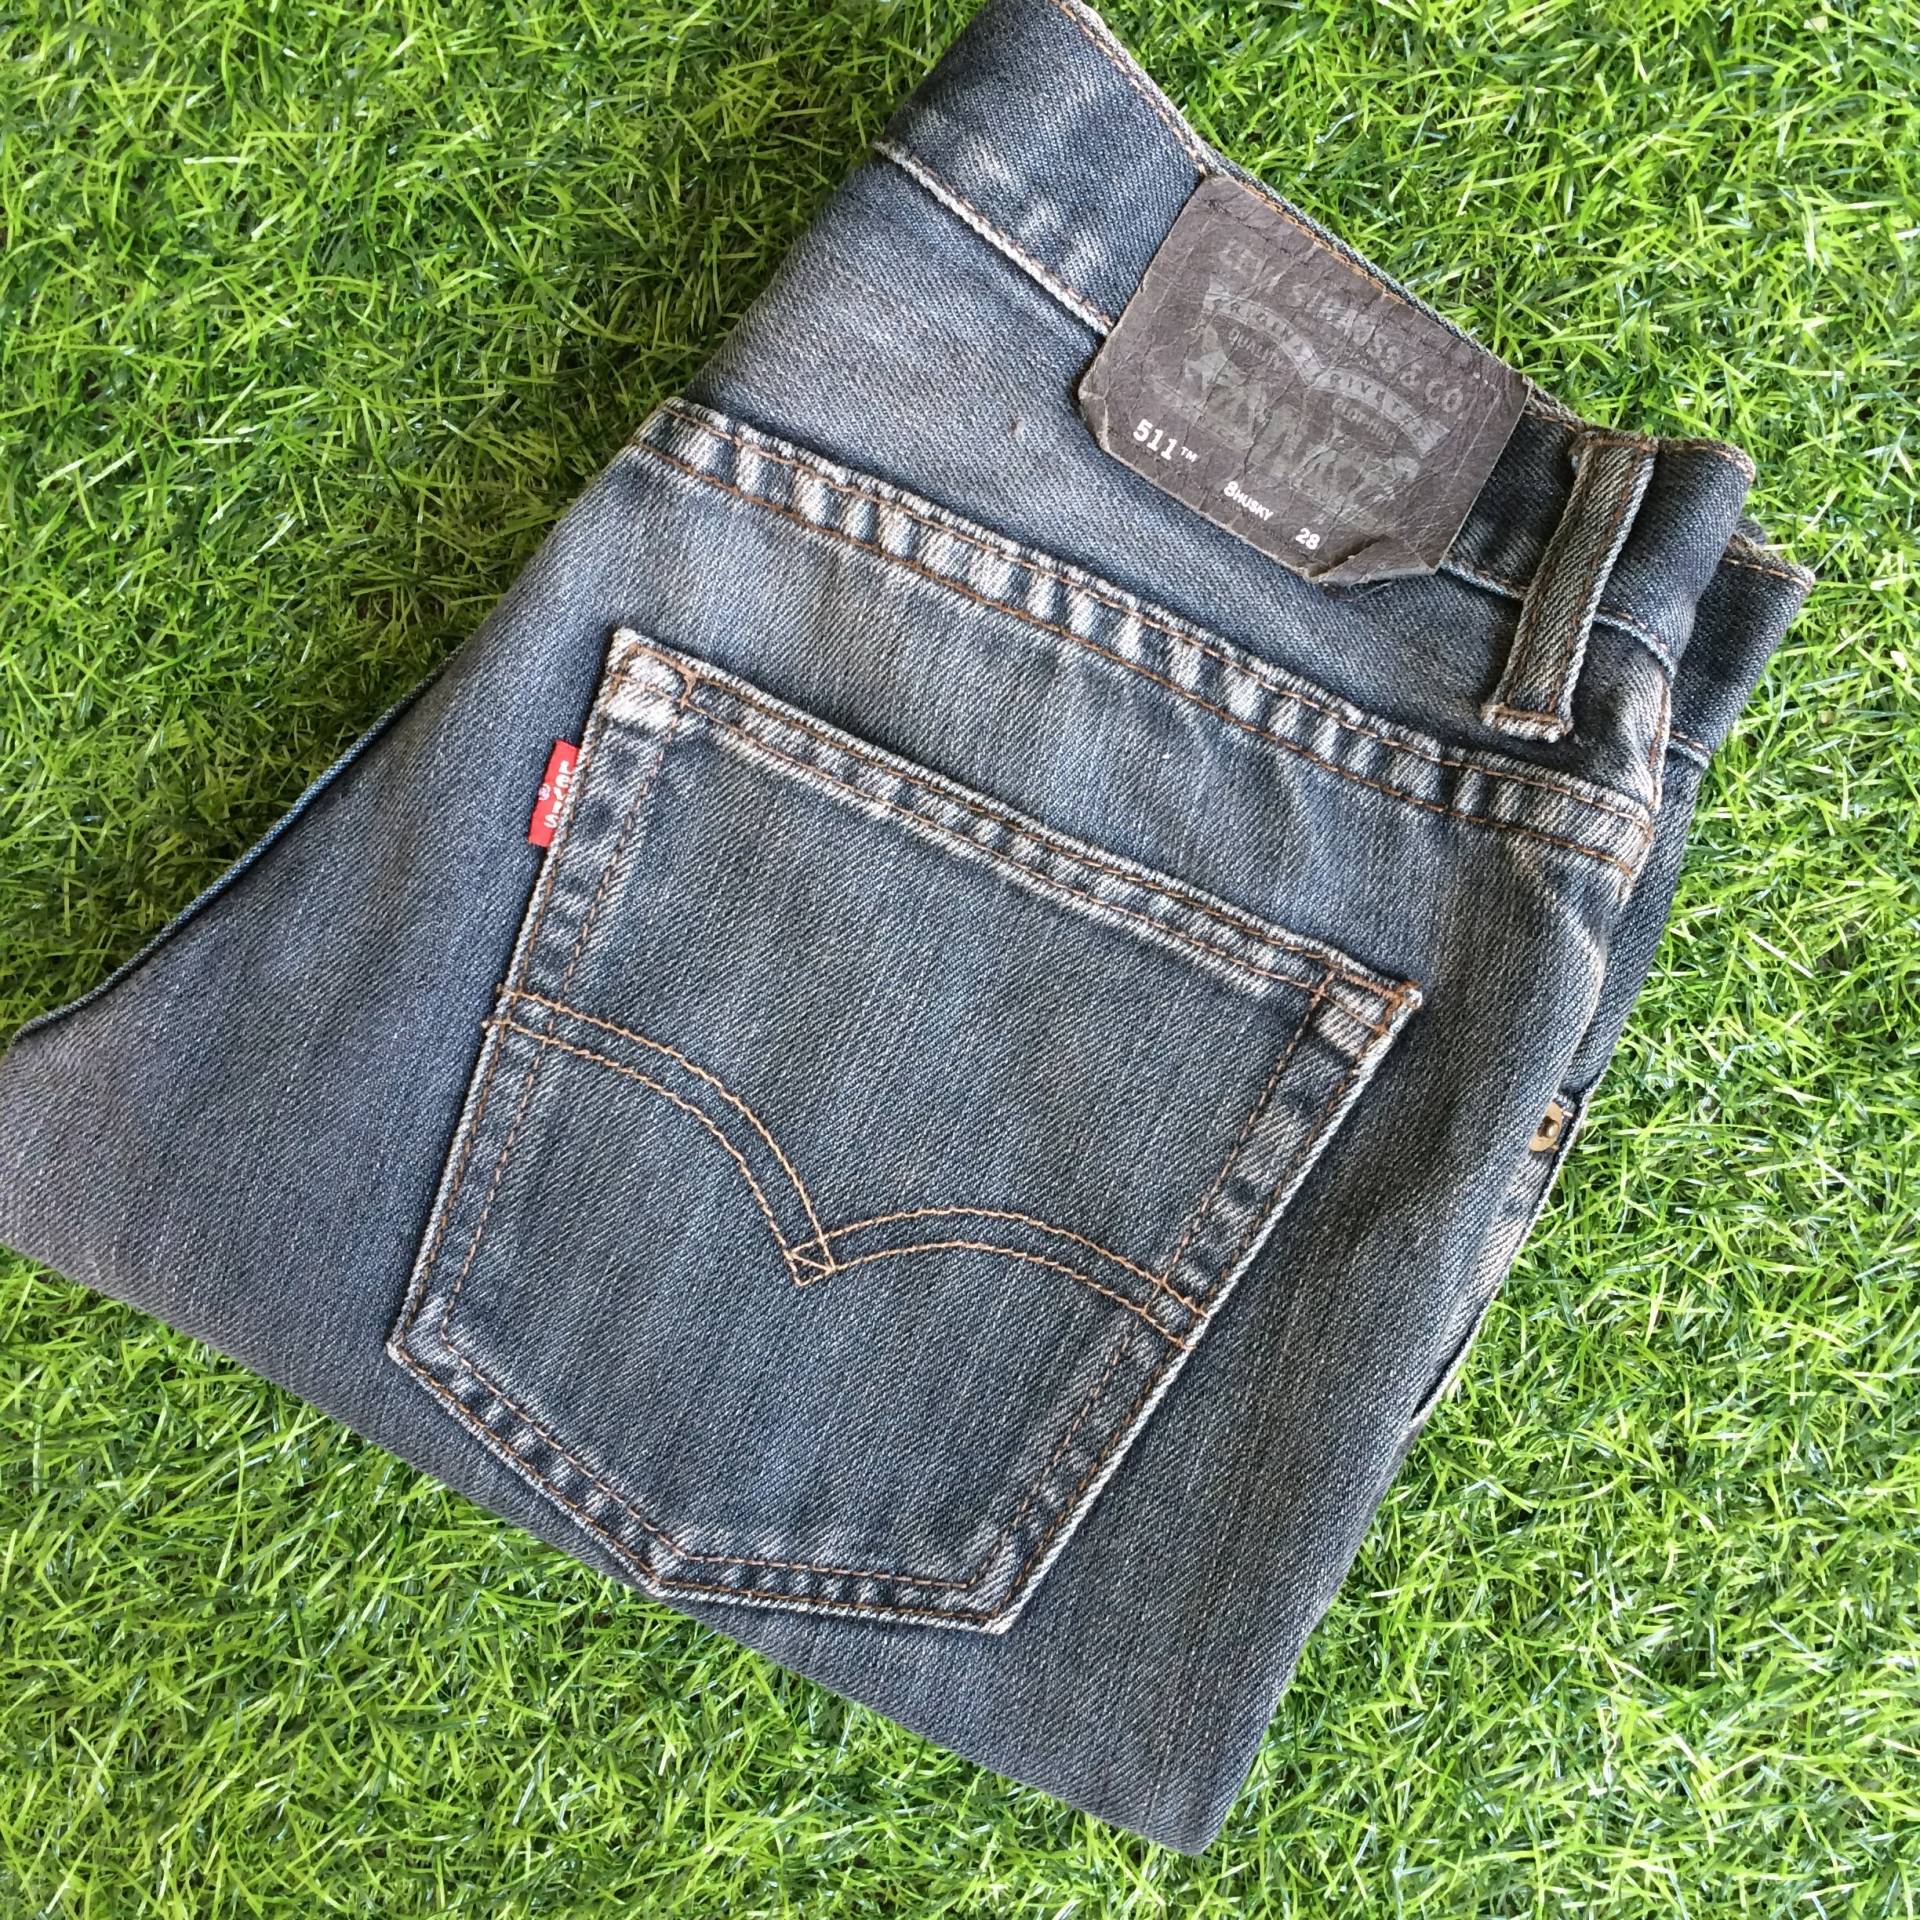 Größe 28 Vintage Distressed Levi Es 511 Cropped Jeans W28 L22 Faded Dark Wash Denim Tapered Leg Skinny Fit Taille 28" von BackyardFashion